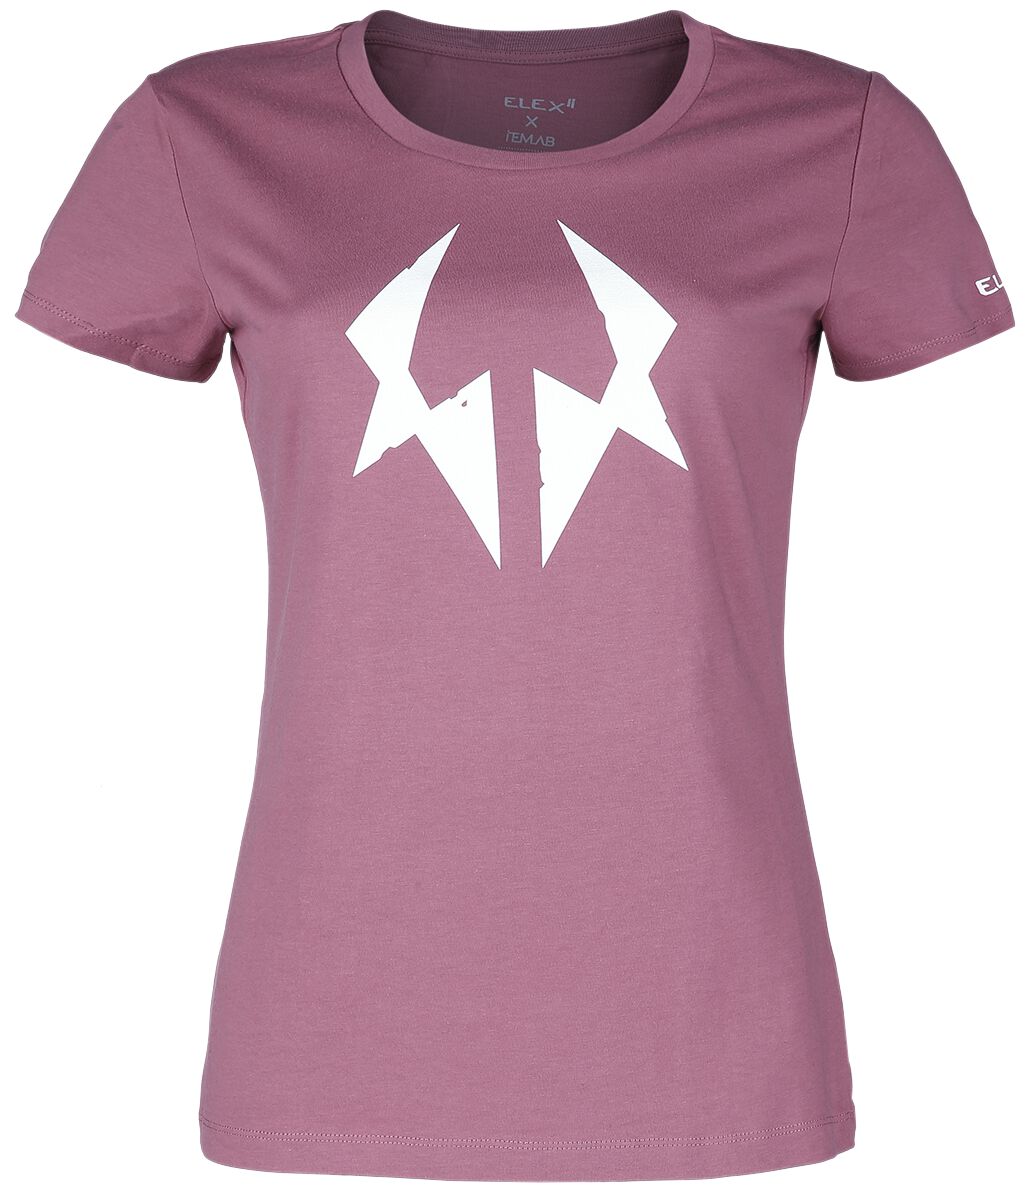 Elex 2 Morkon T-Shirt light pink